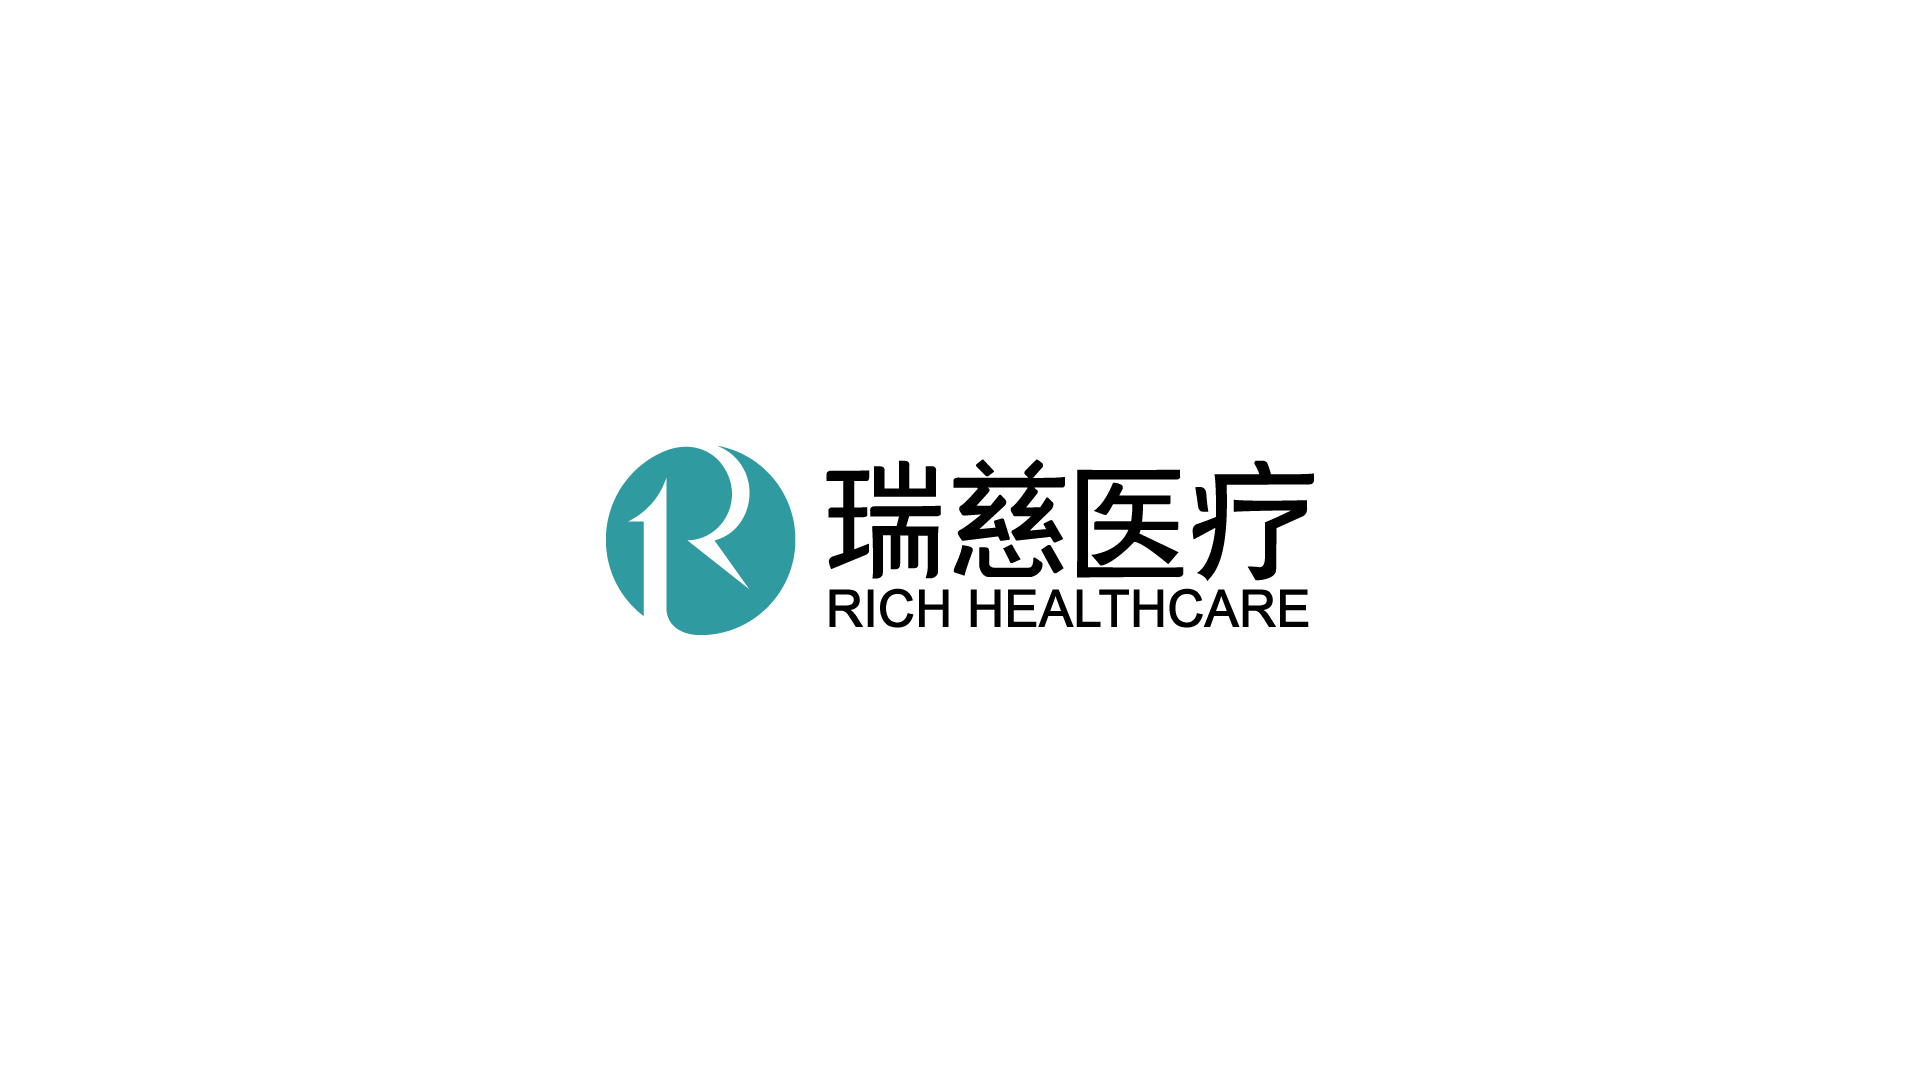 Rich Healthcare